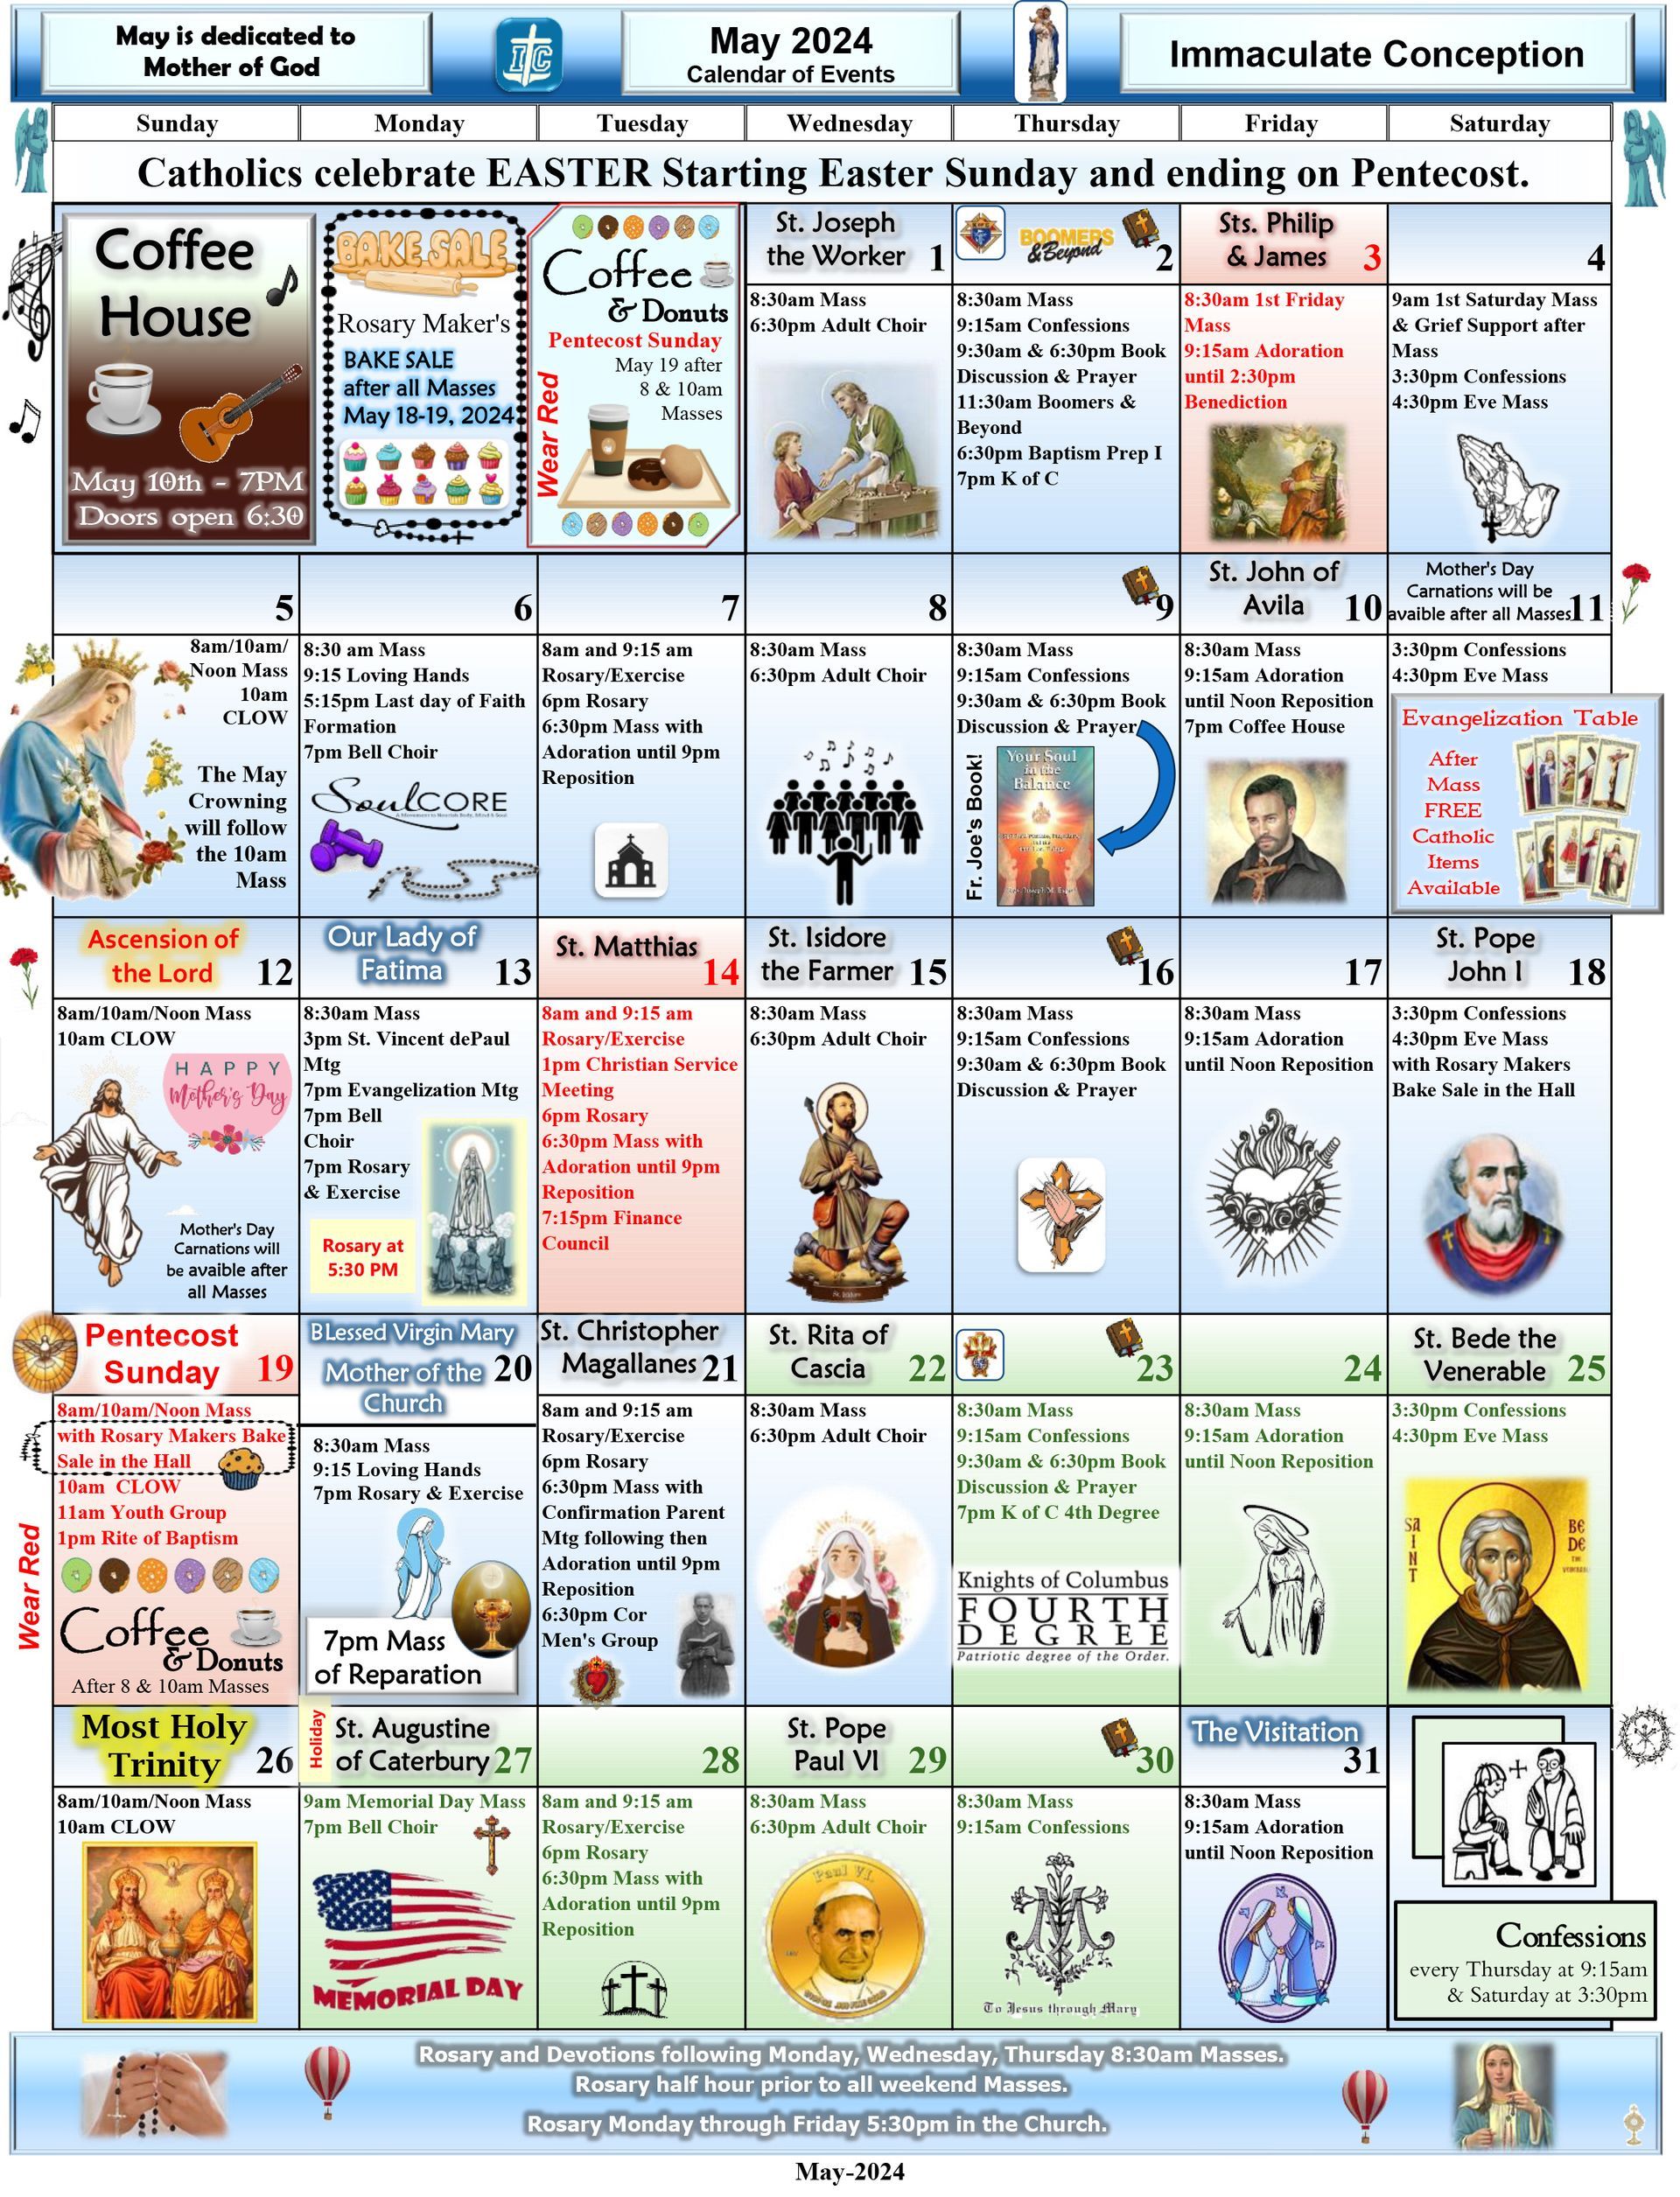 Immaculate Conception Church Calendar